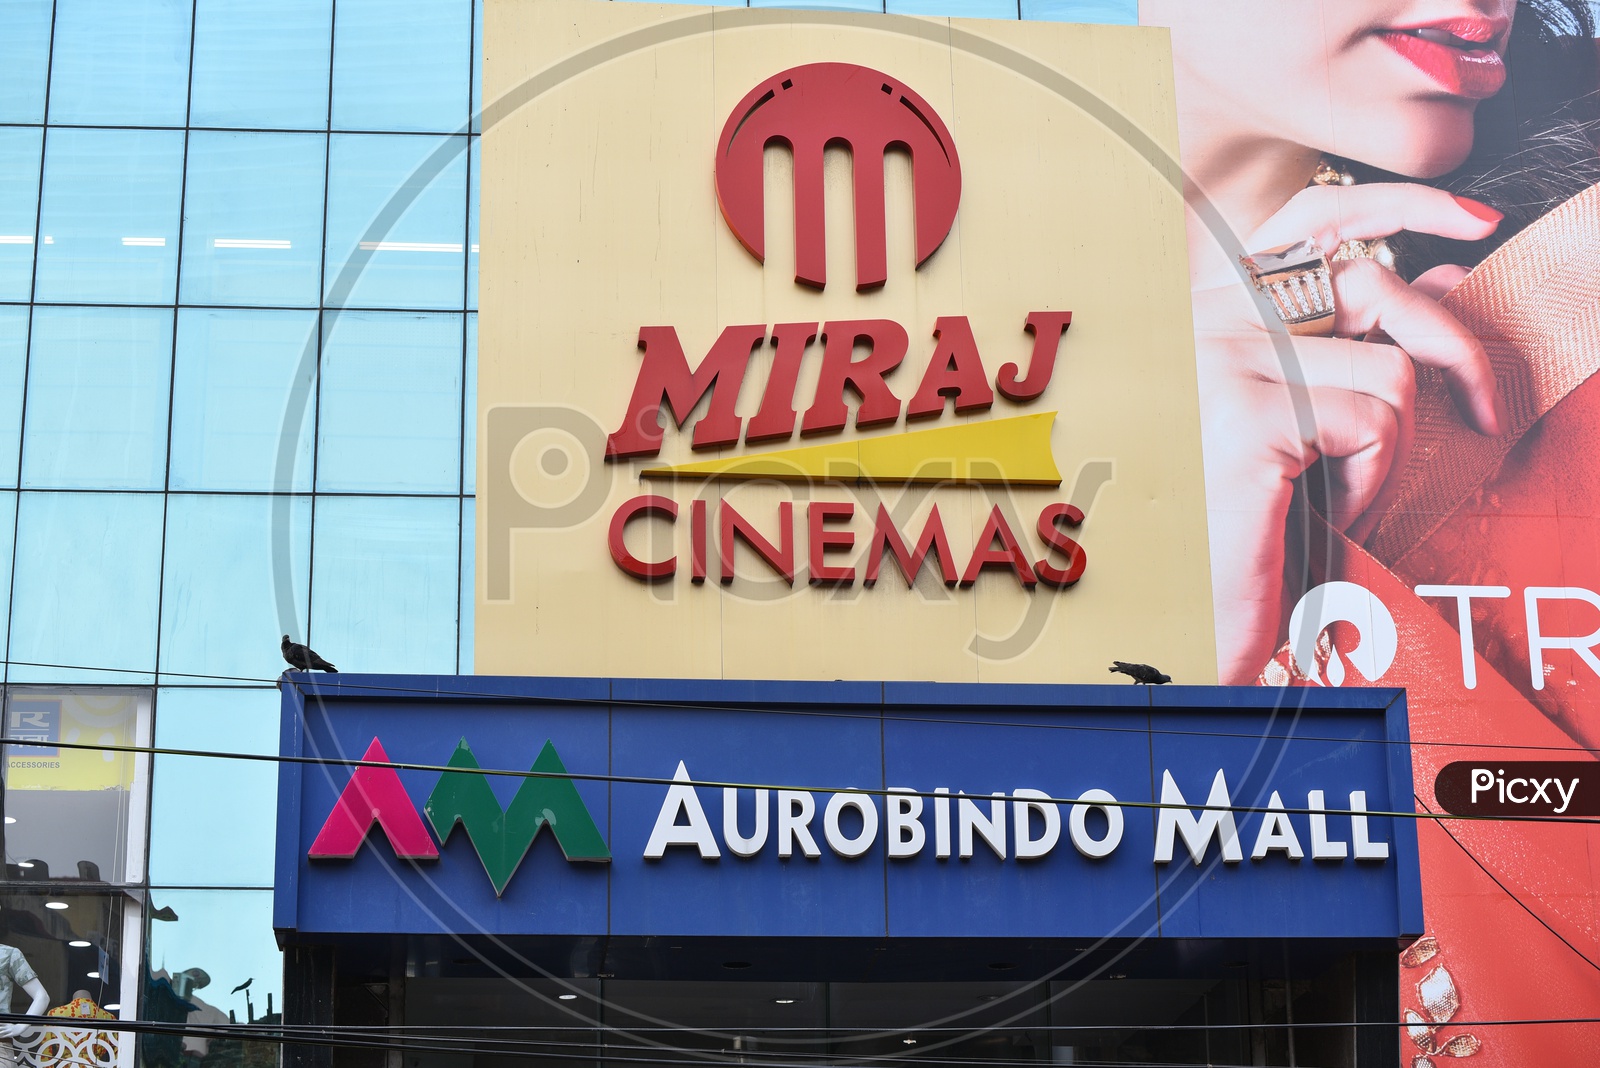 Aurobindo Mall and Miraj Cinemas  In Howrah